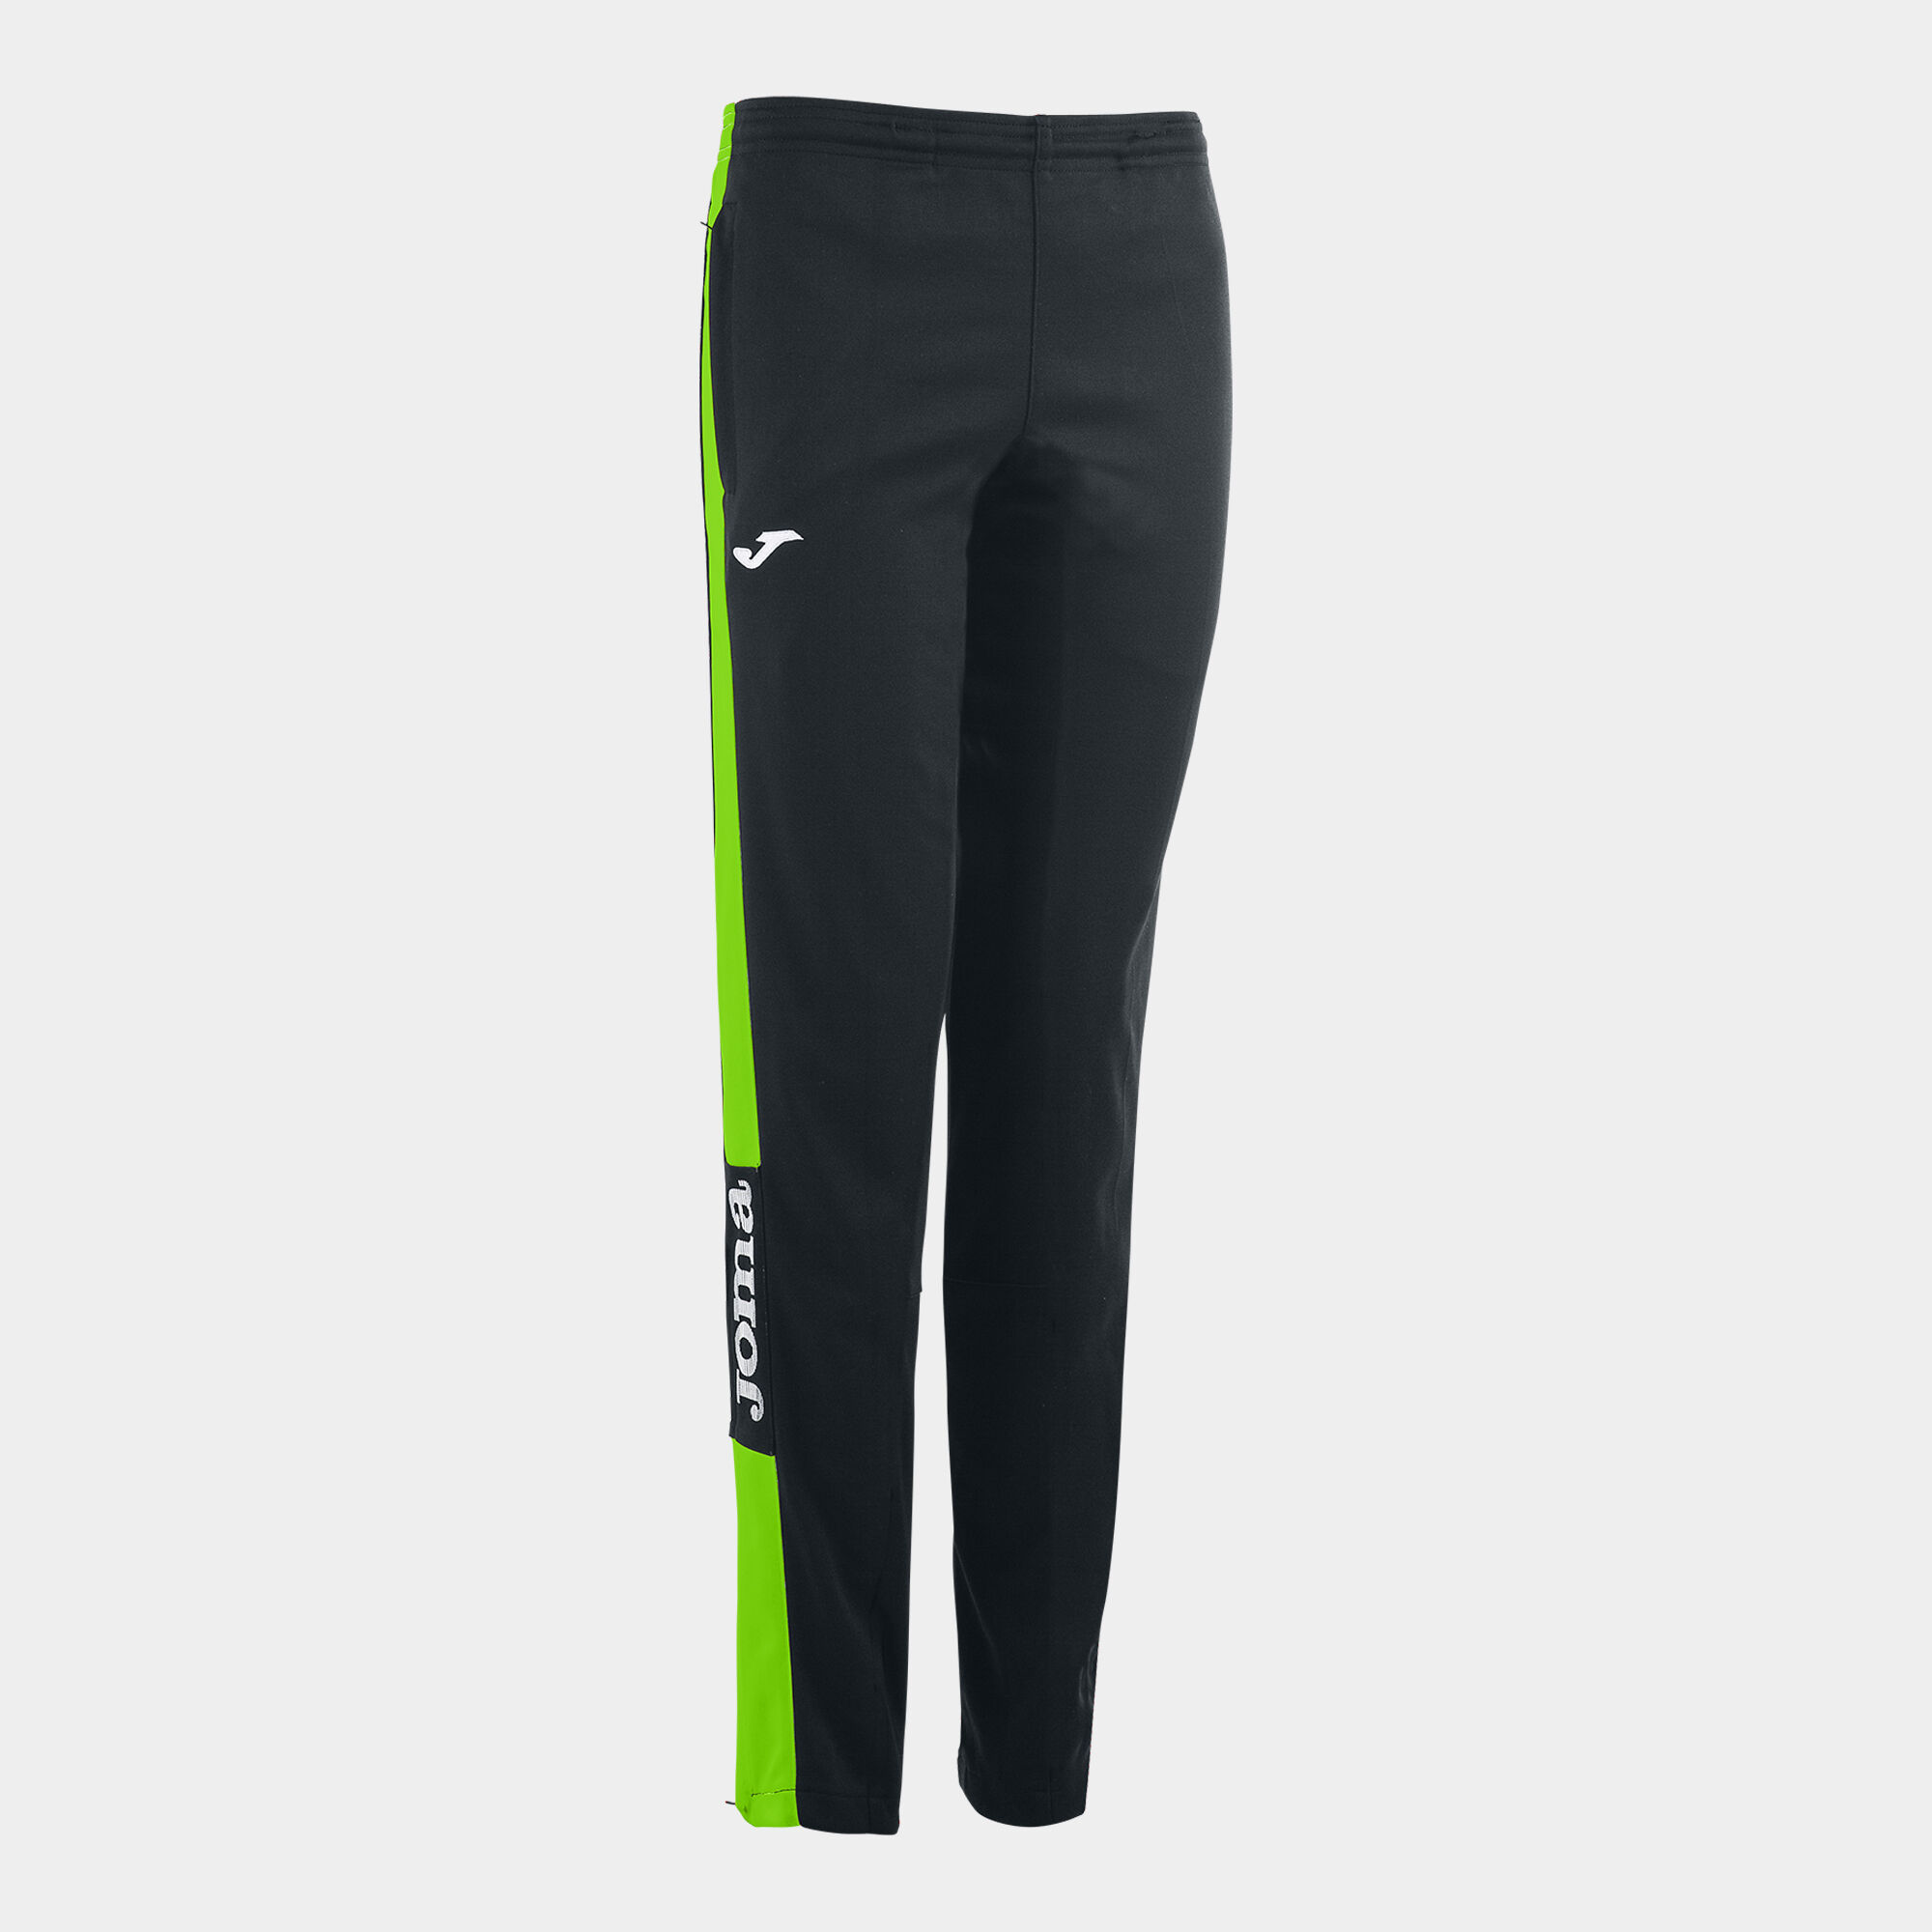 Longs pants woman Championship IV black fluorescent green